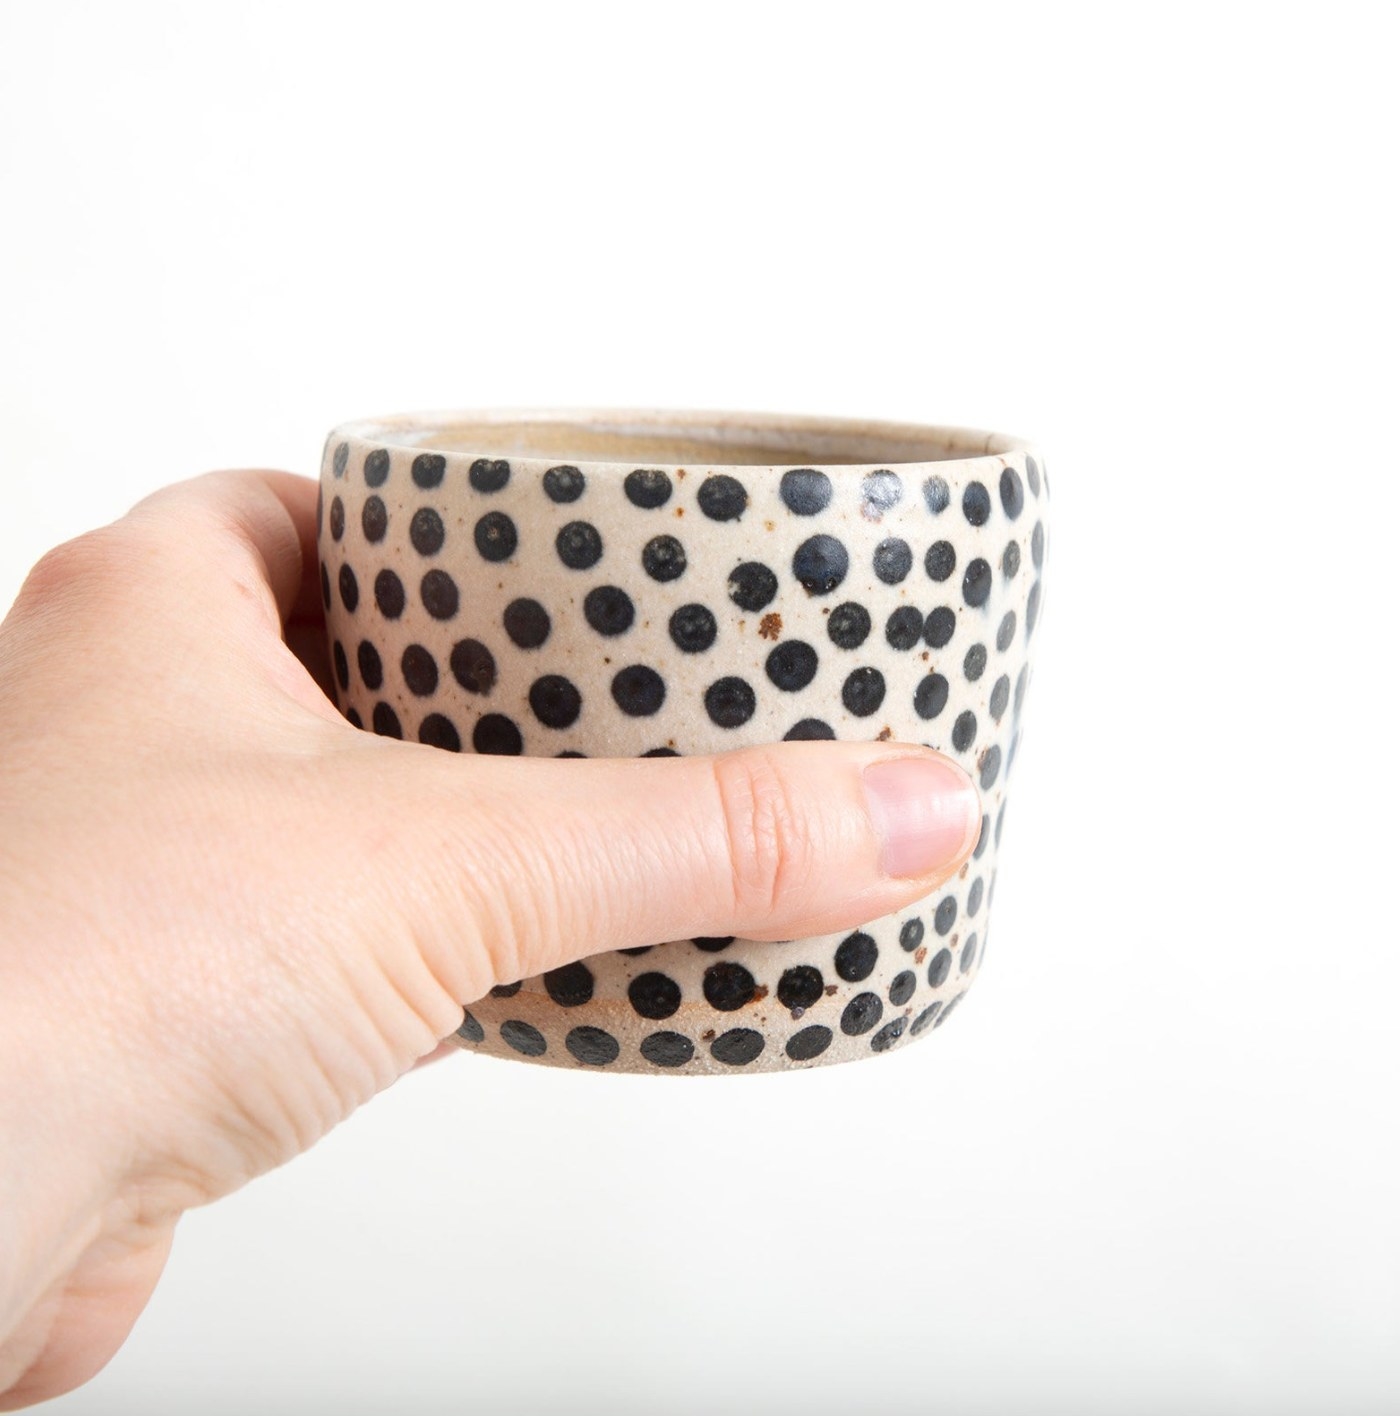 The ceramic tumbler with black dolka dots